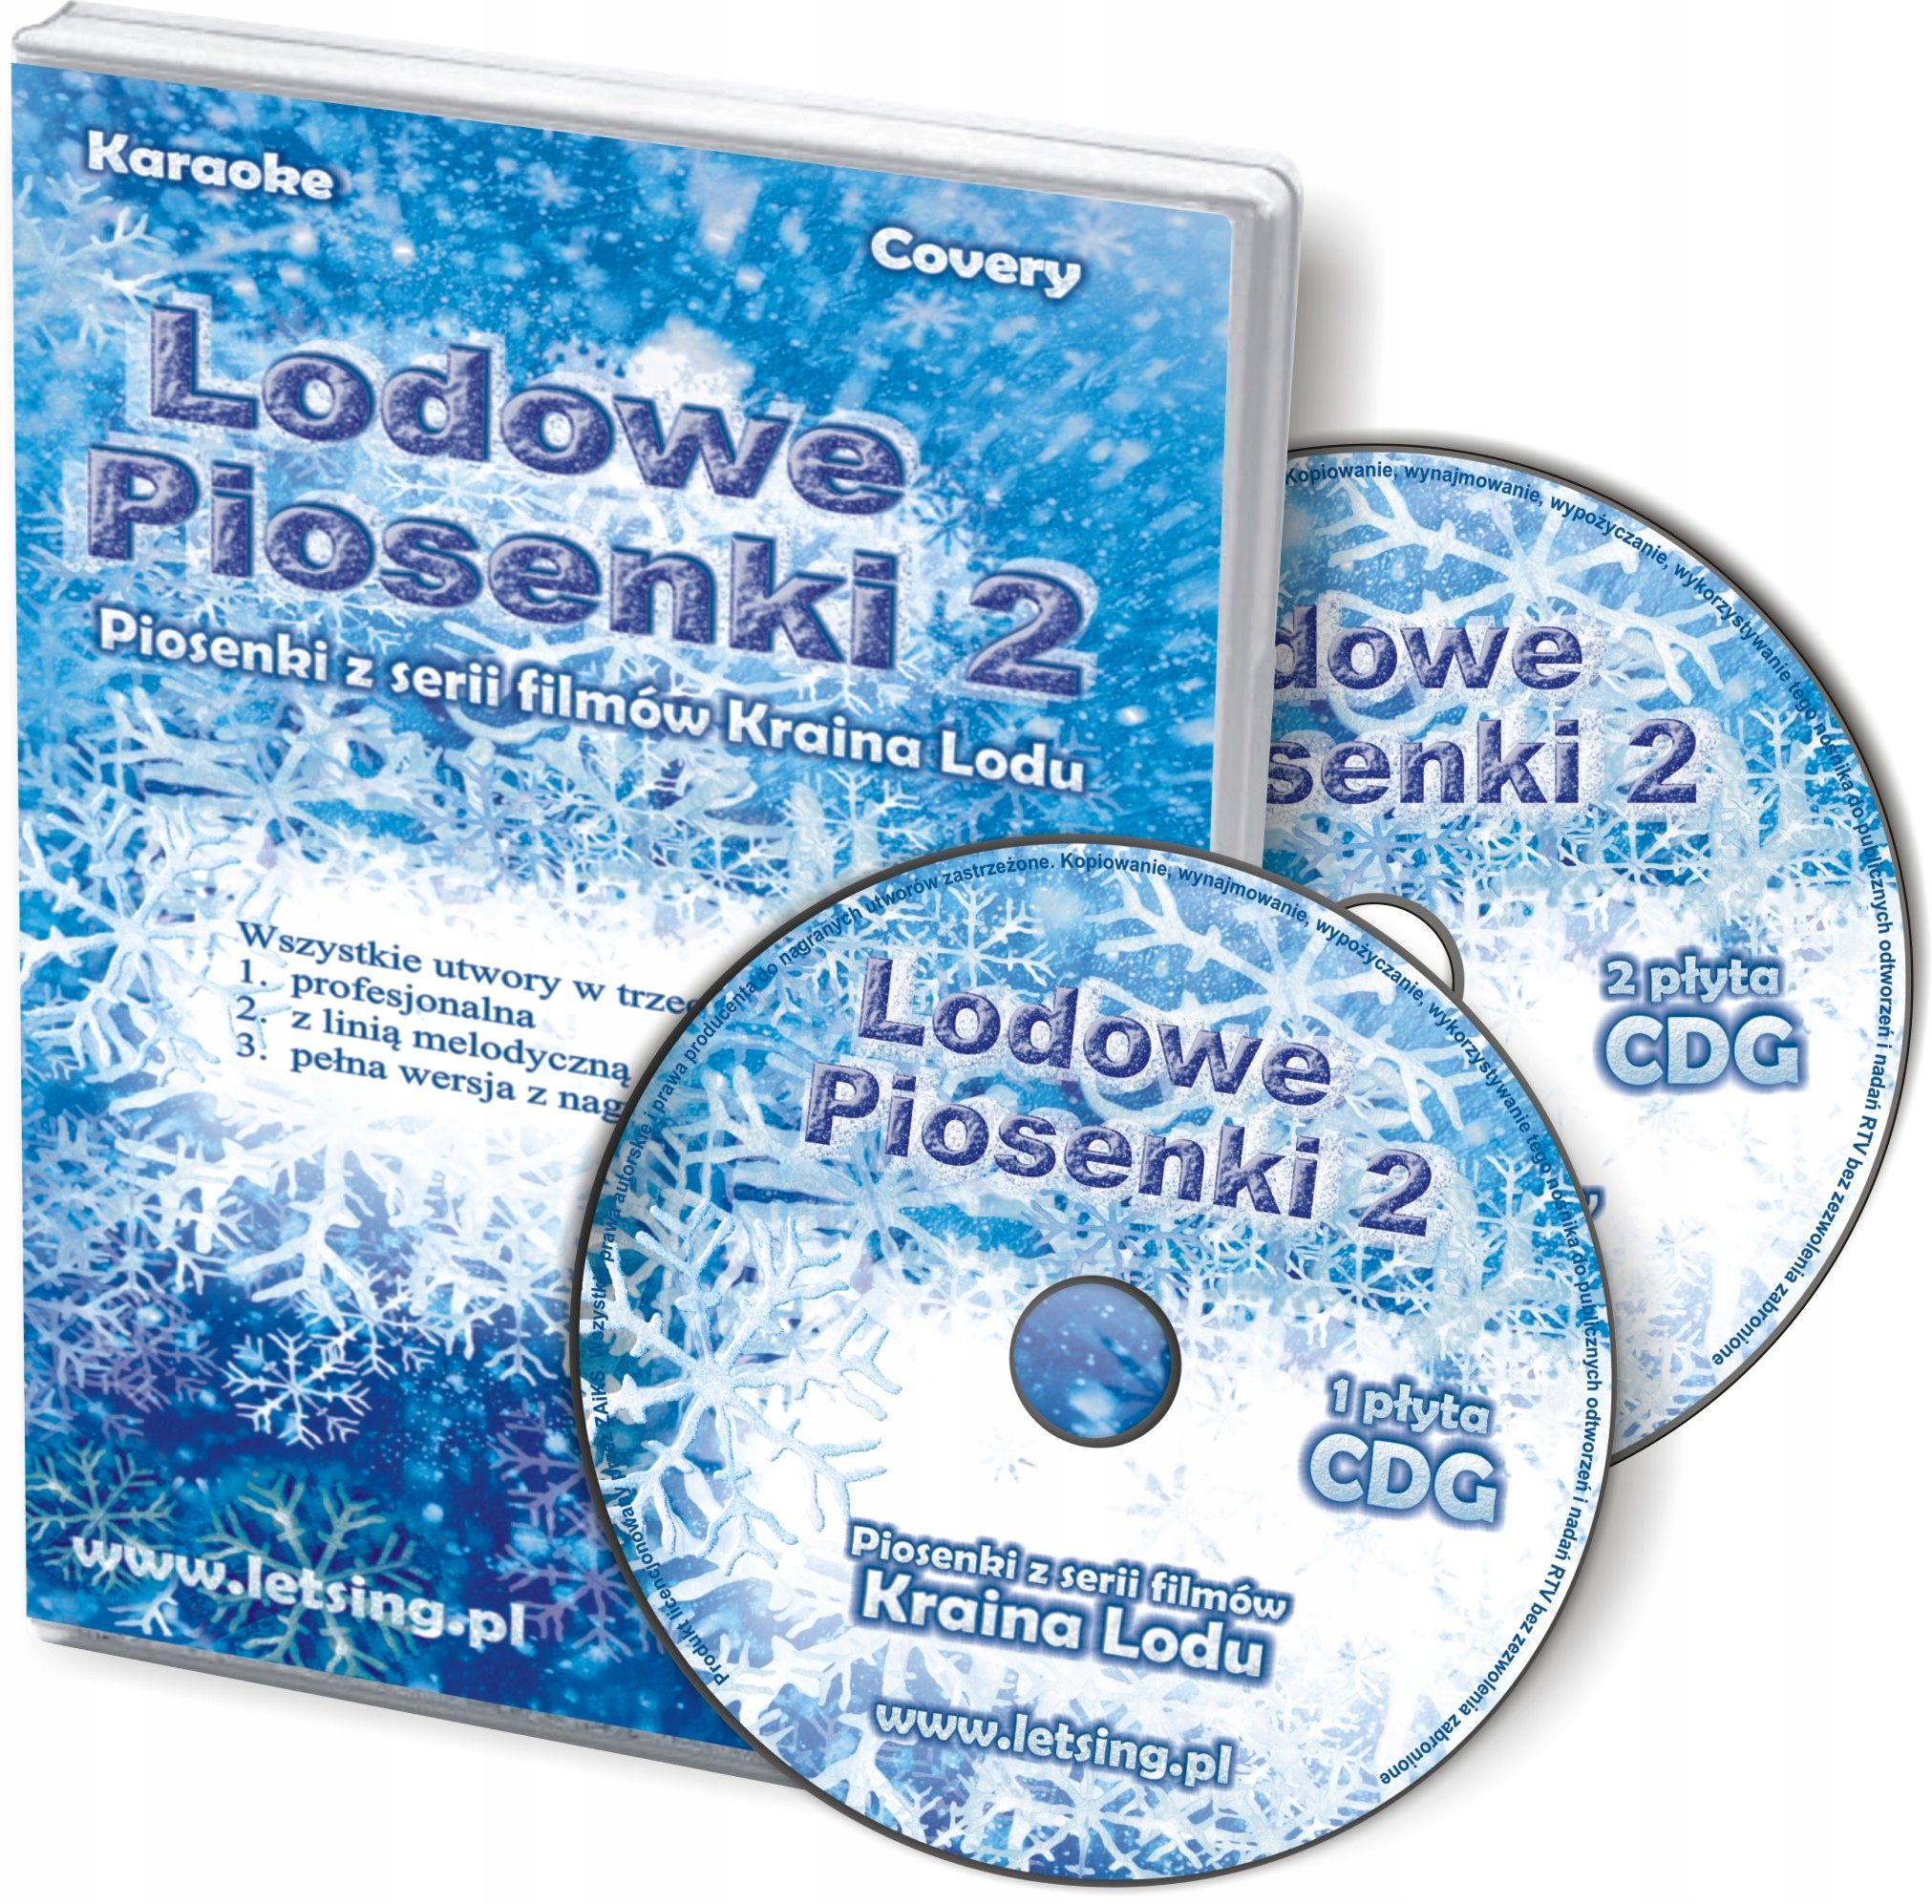 Płyty CD CDG Kraina Lodu Frozen Lodowe Piosenki 2